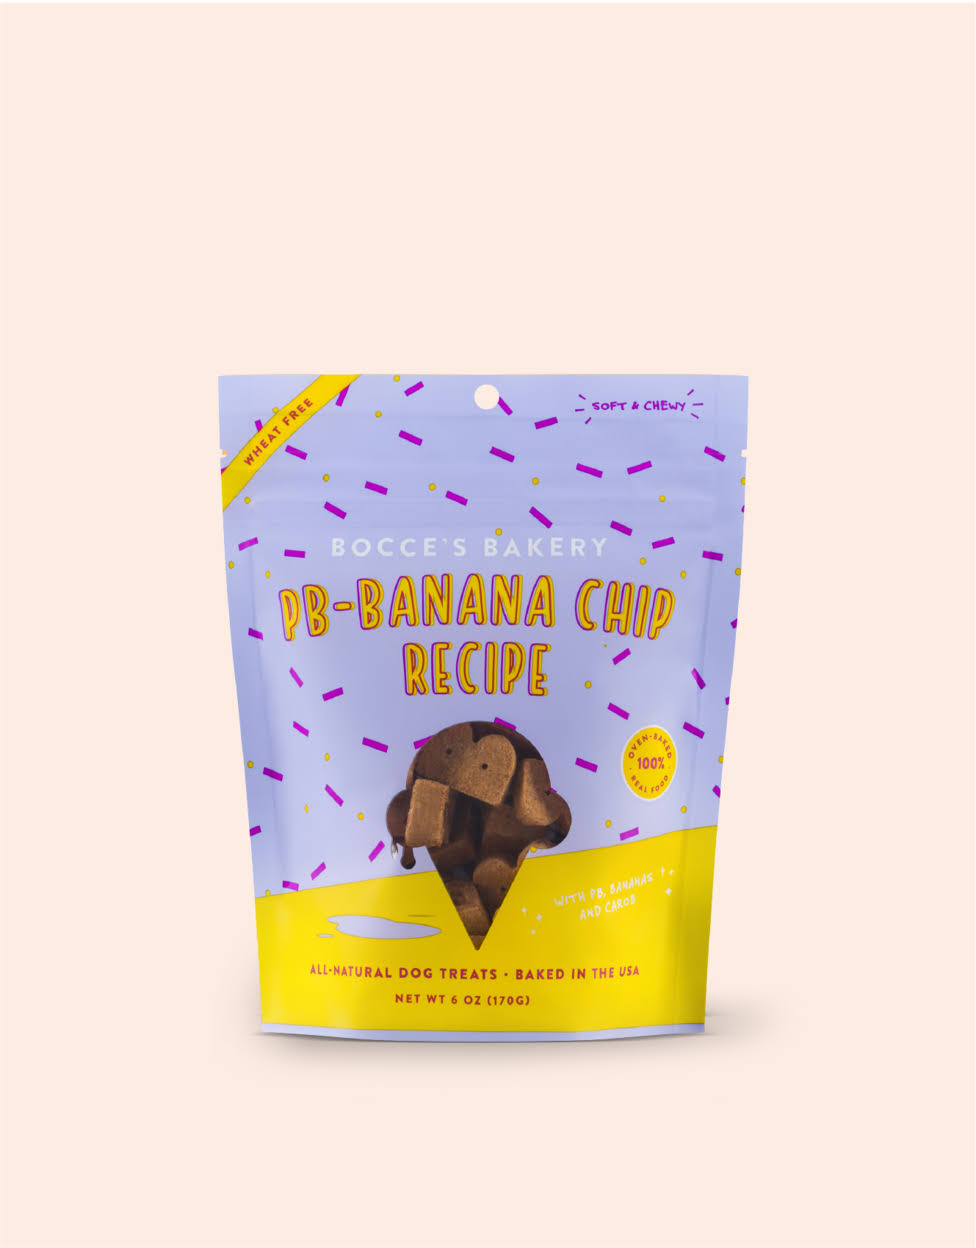 Bocce’s Bakery Scoop Shop PB-Banana Chip Soft & Chewy Dog Treats, 6-oz